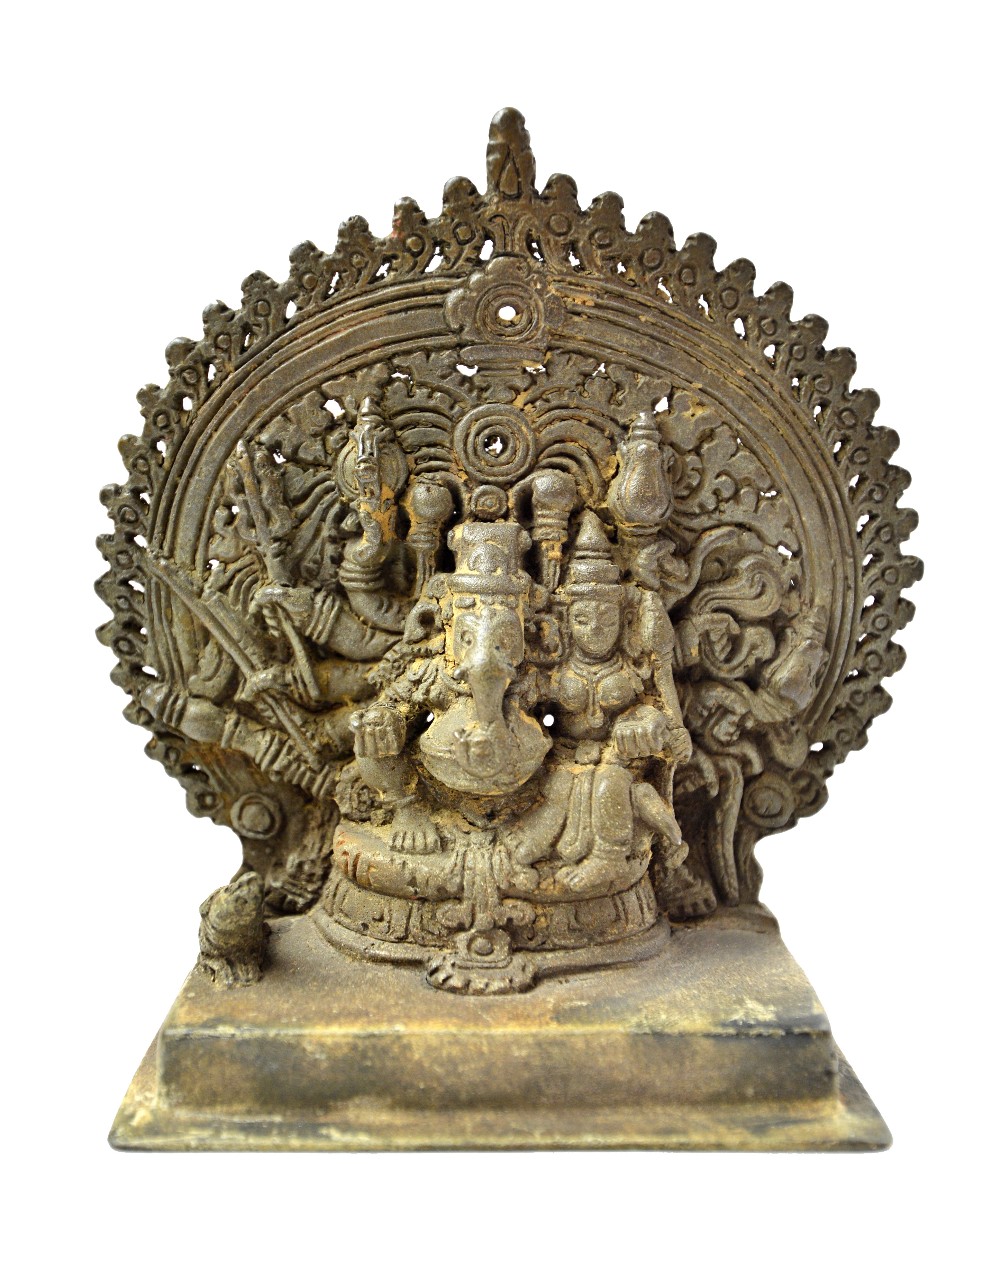 A Kerala bronze group of Mahaganapati, South India, 17th century,